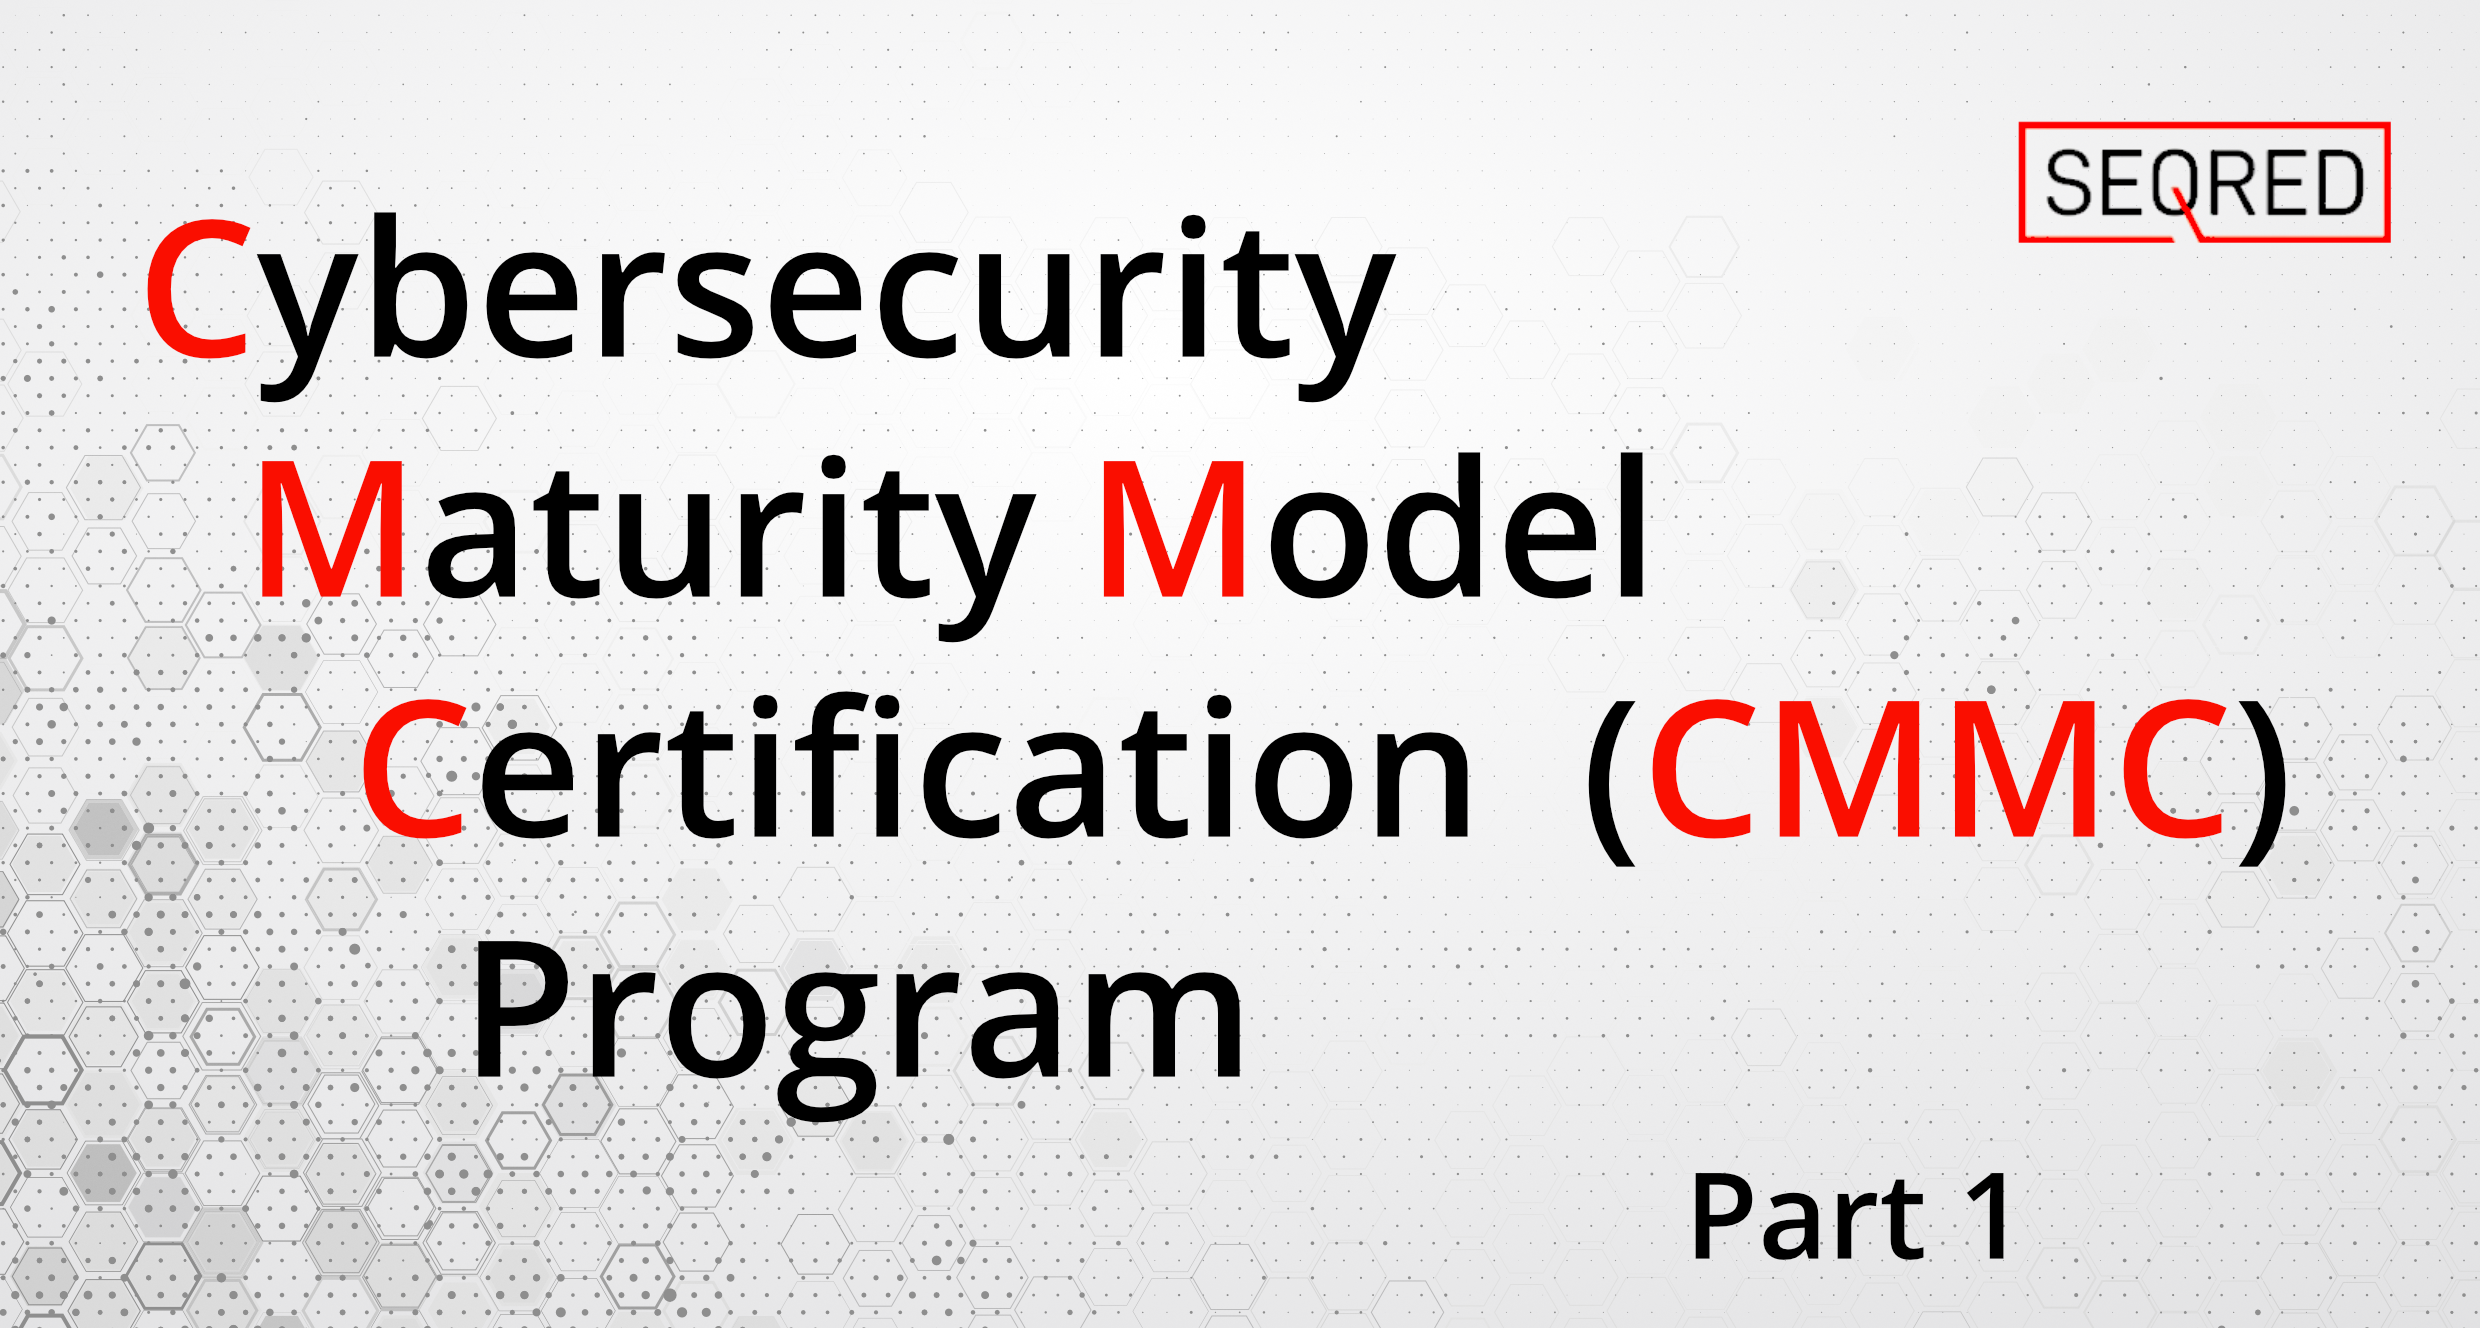 Cybersecurity Maturity Model Certification (CMMC) Program – Part 1